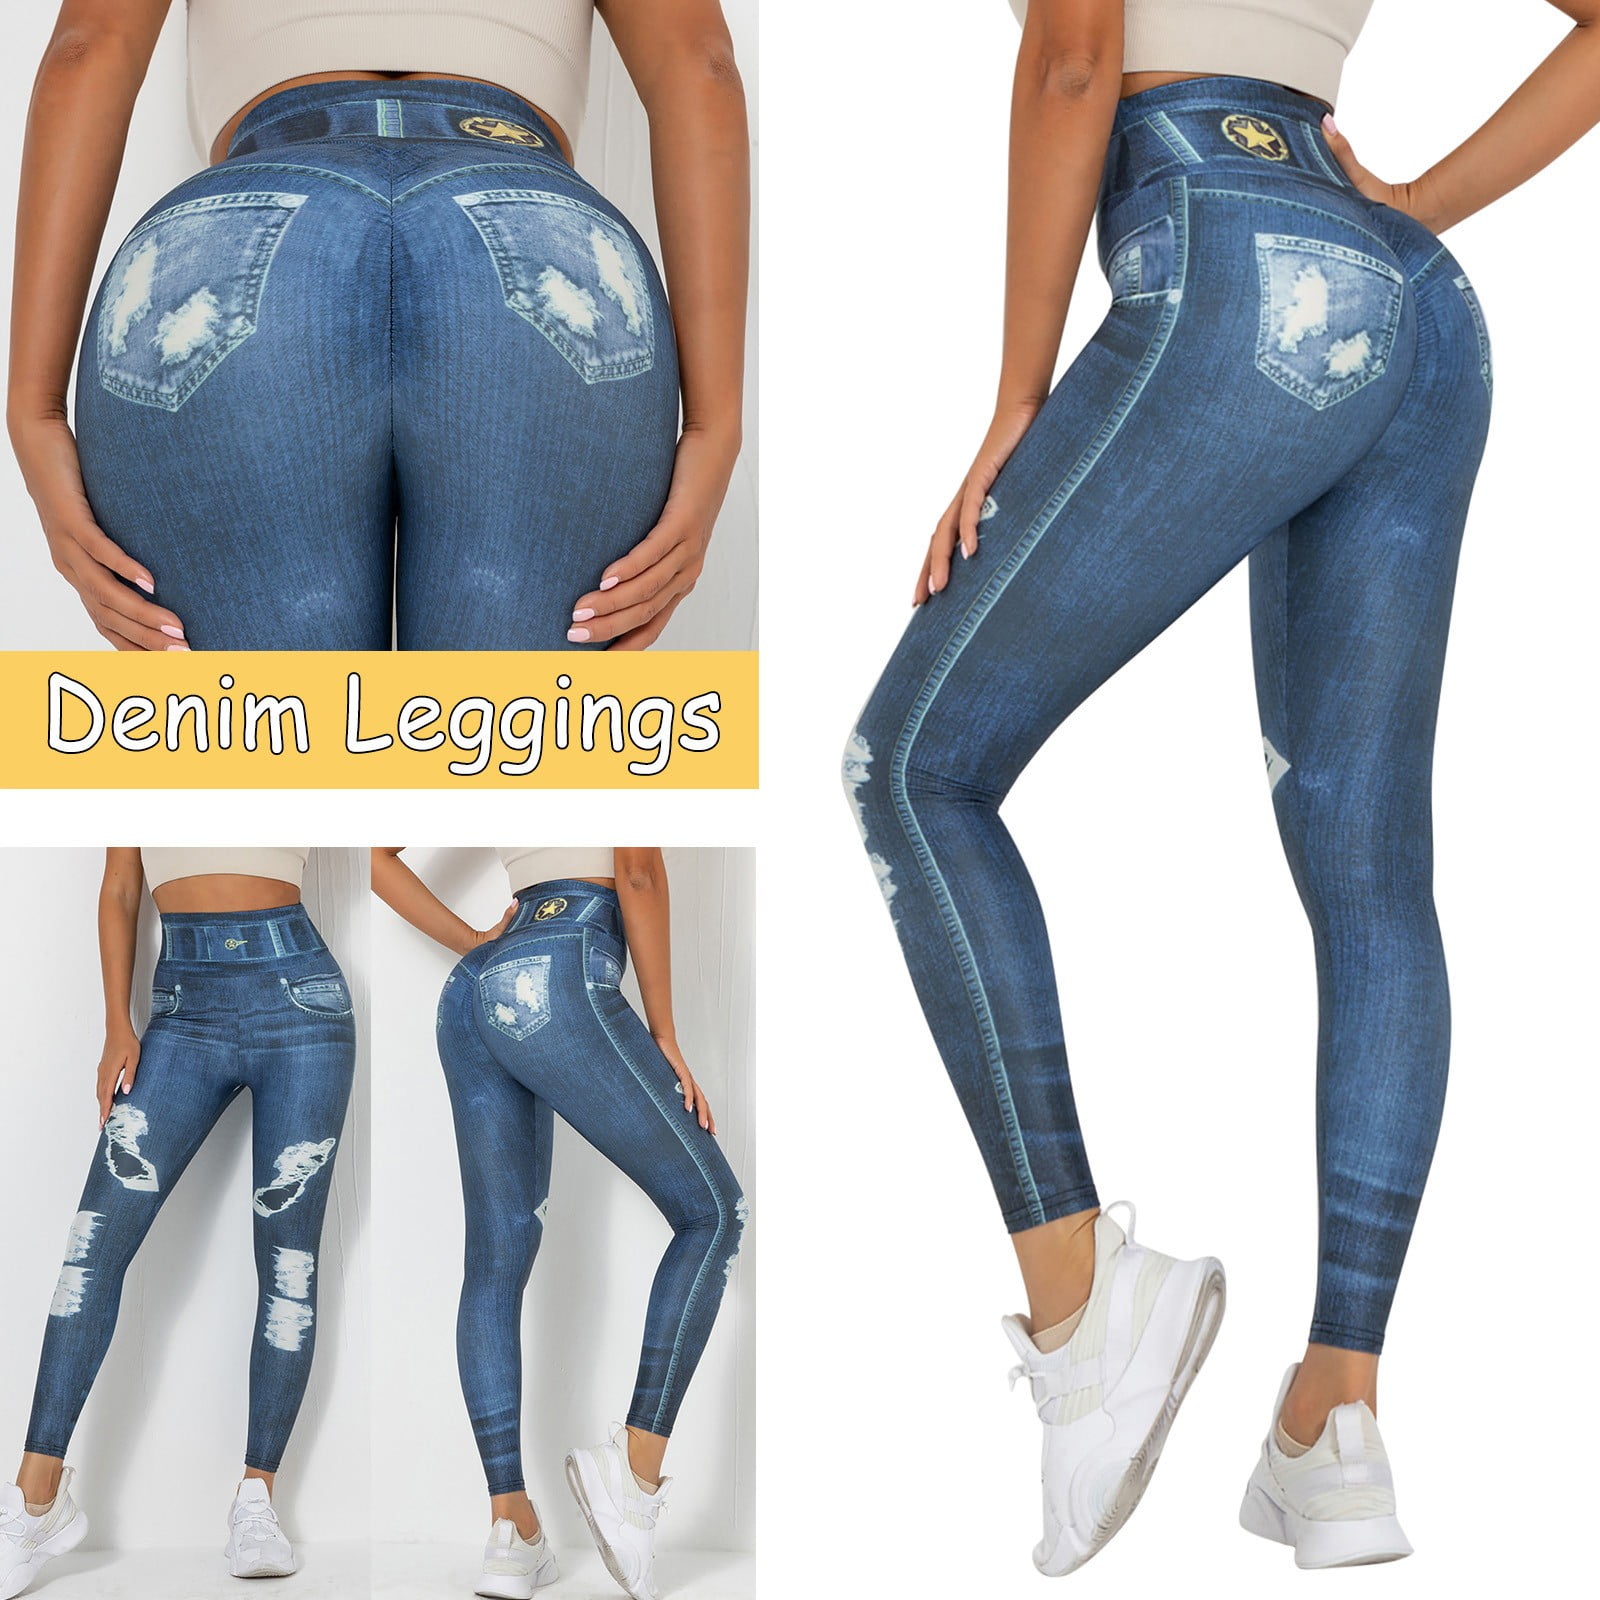 YYDGH Jean Look Leggings for Women High Waist Tummy Control with Back  Pockets Denim Printed Fake Jean Leggings Seamless Light Blue M